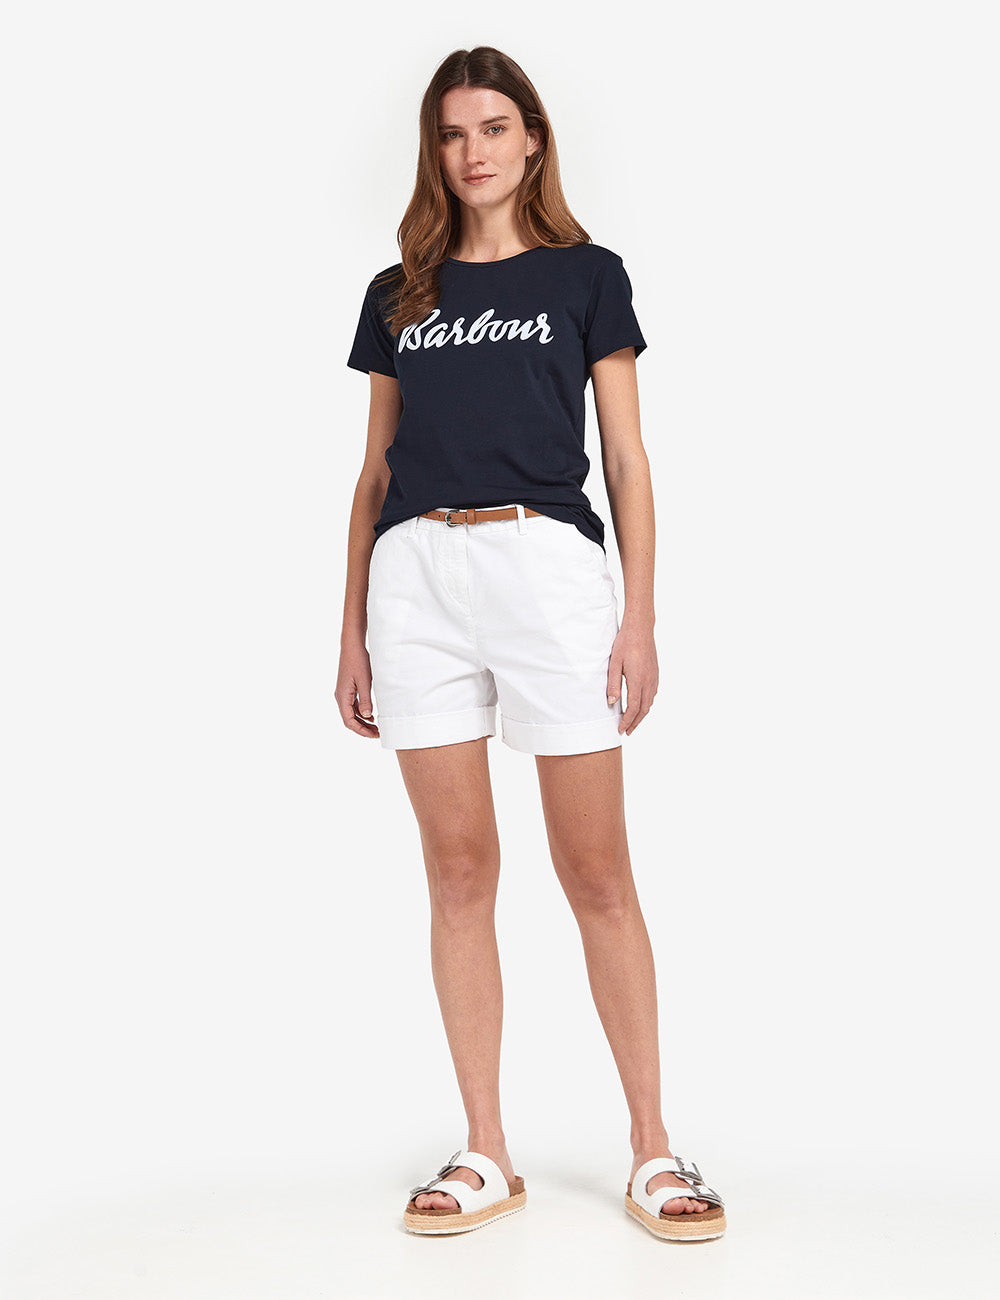 Barbour Otterburn T-Shirt - Navy/White